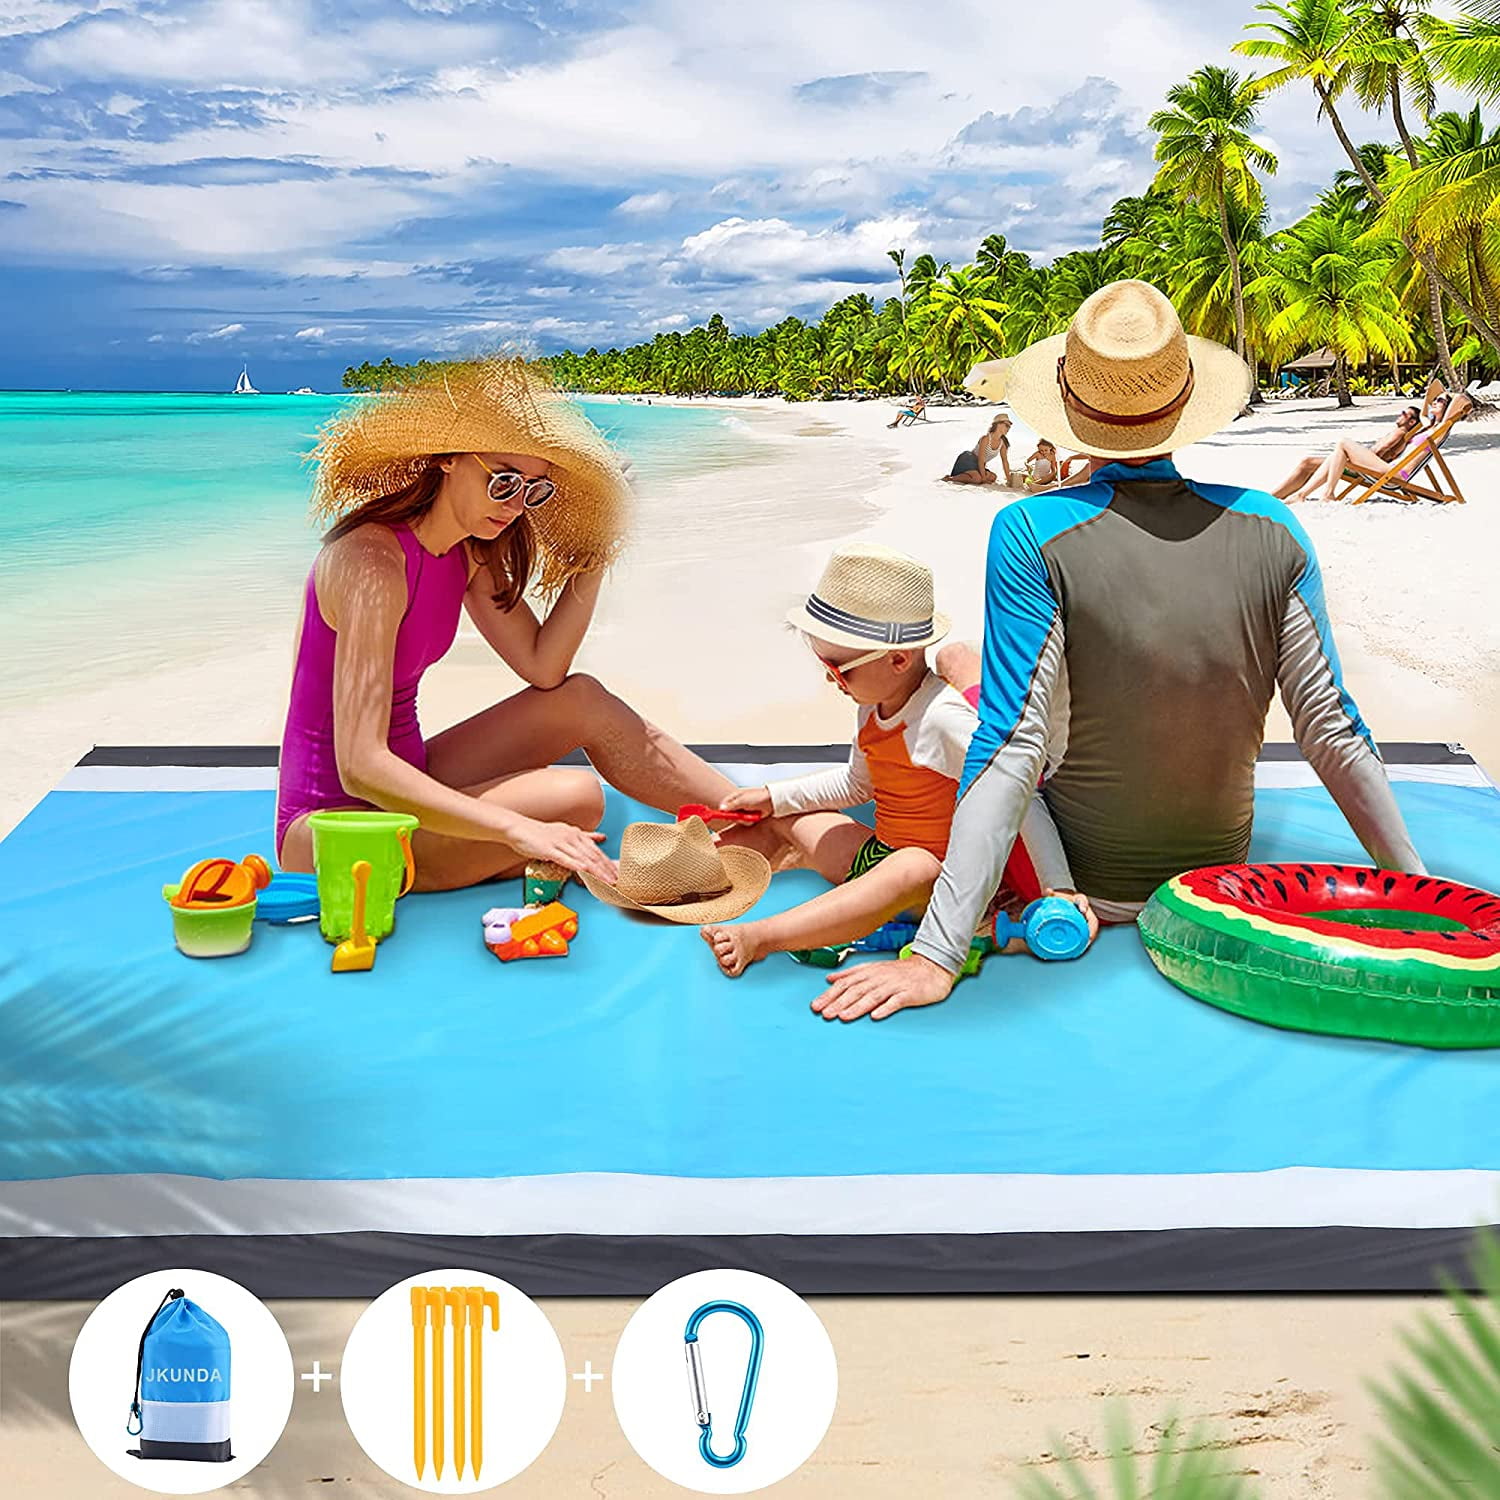 Beach Blanket Sand Proof Lightweight Sand Mat Outdoor Blanket Picnic Travel  US 